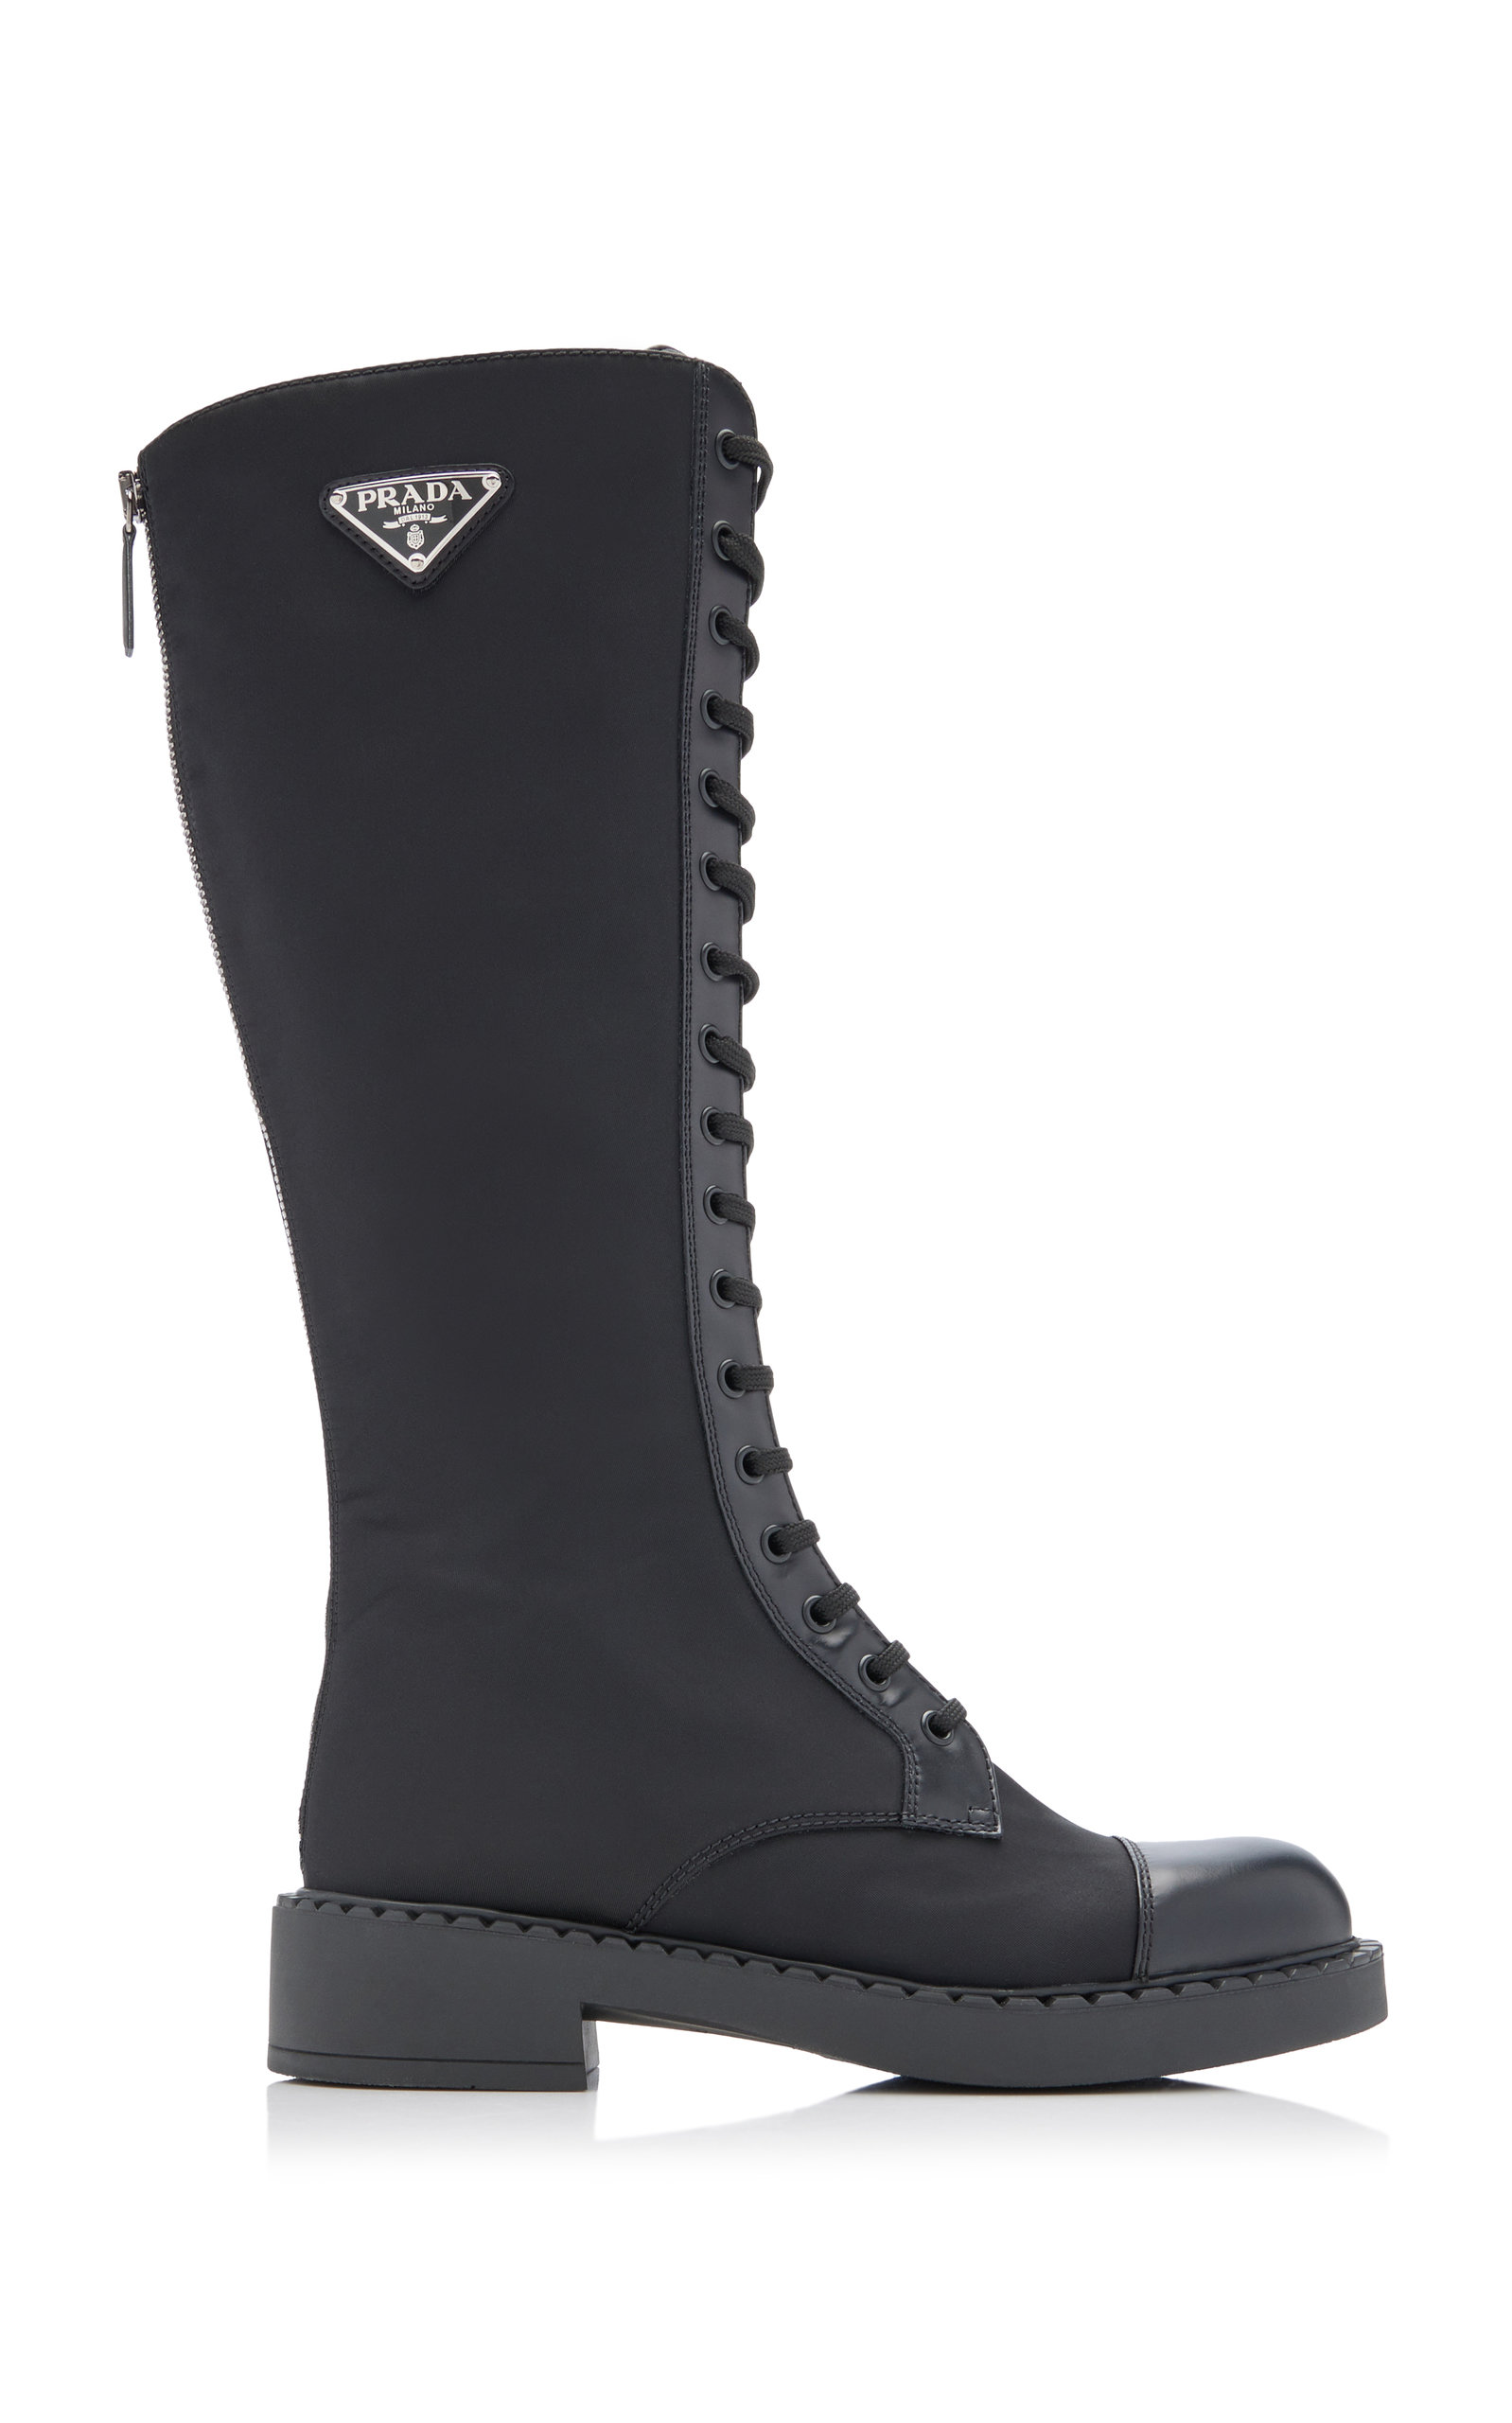 Prada - Women's Leather-Trimmed Nylon Lace-Up Knee Boots - Black - IT 36.5 - Moda Operandi